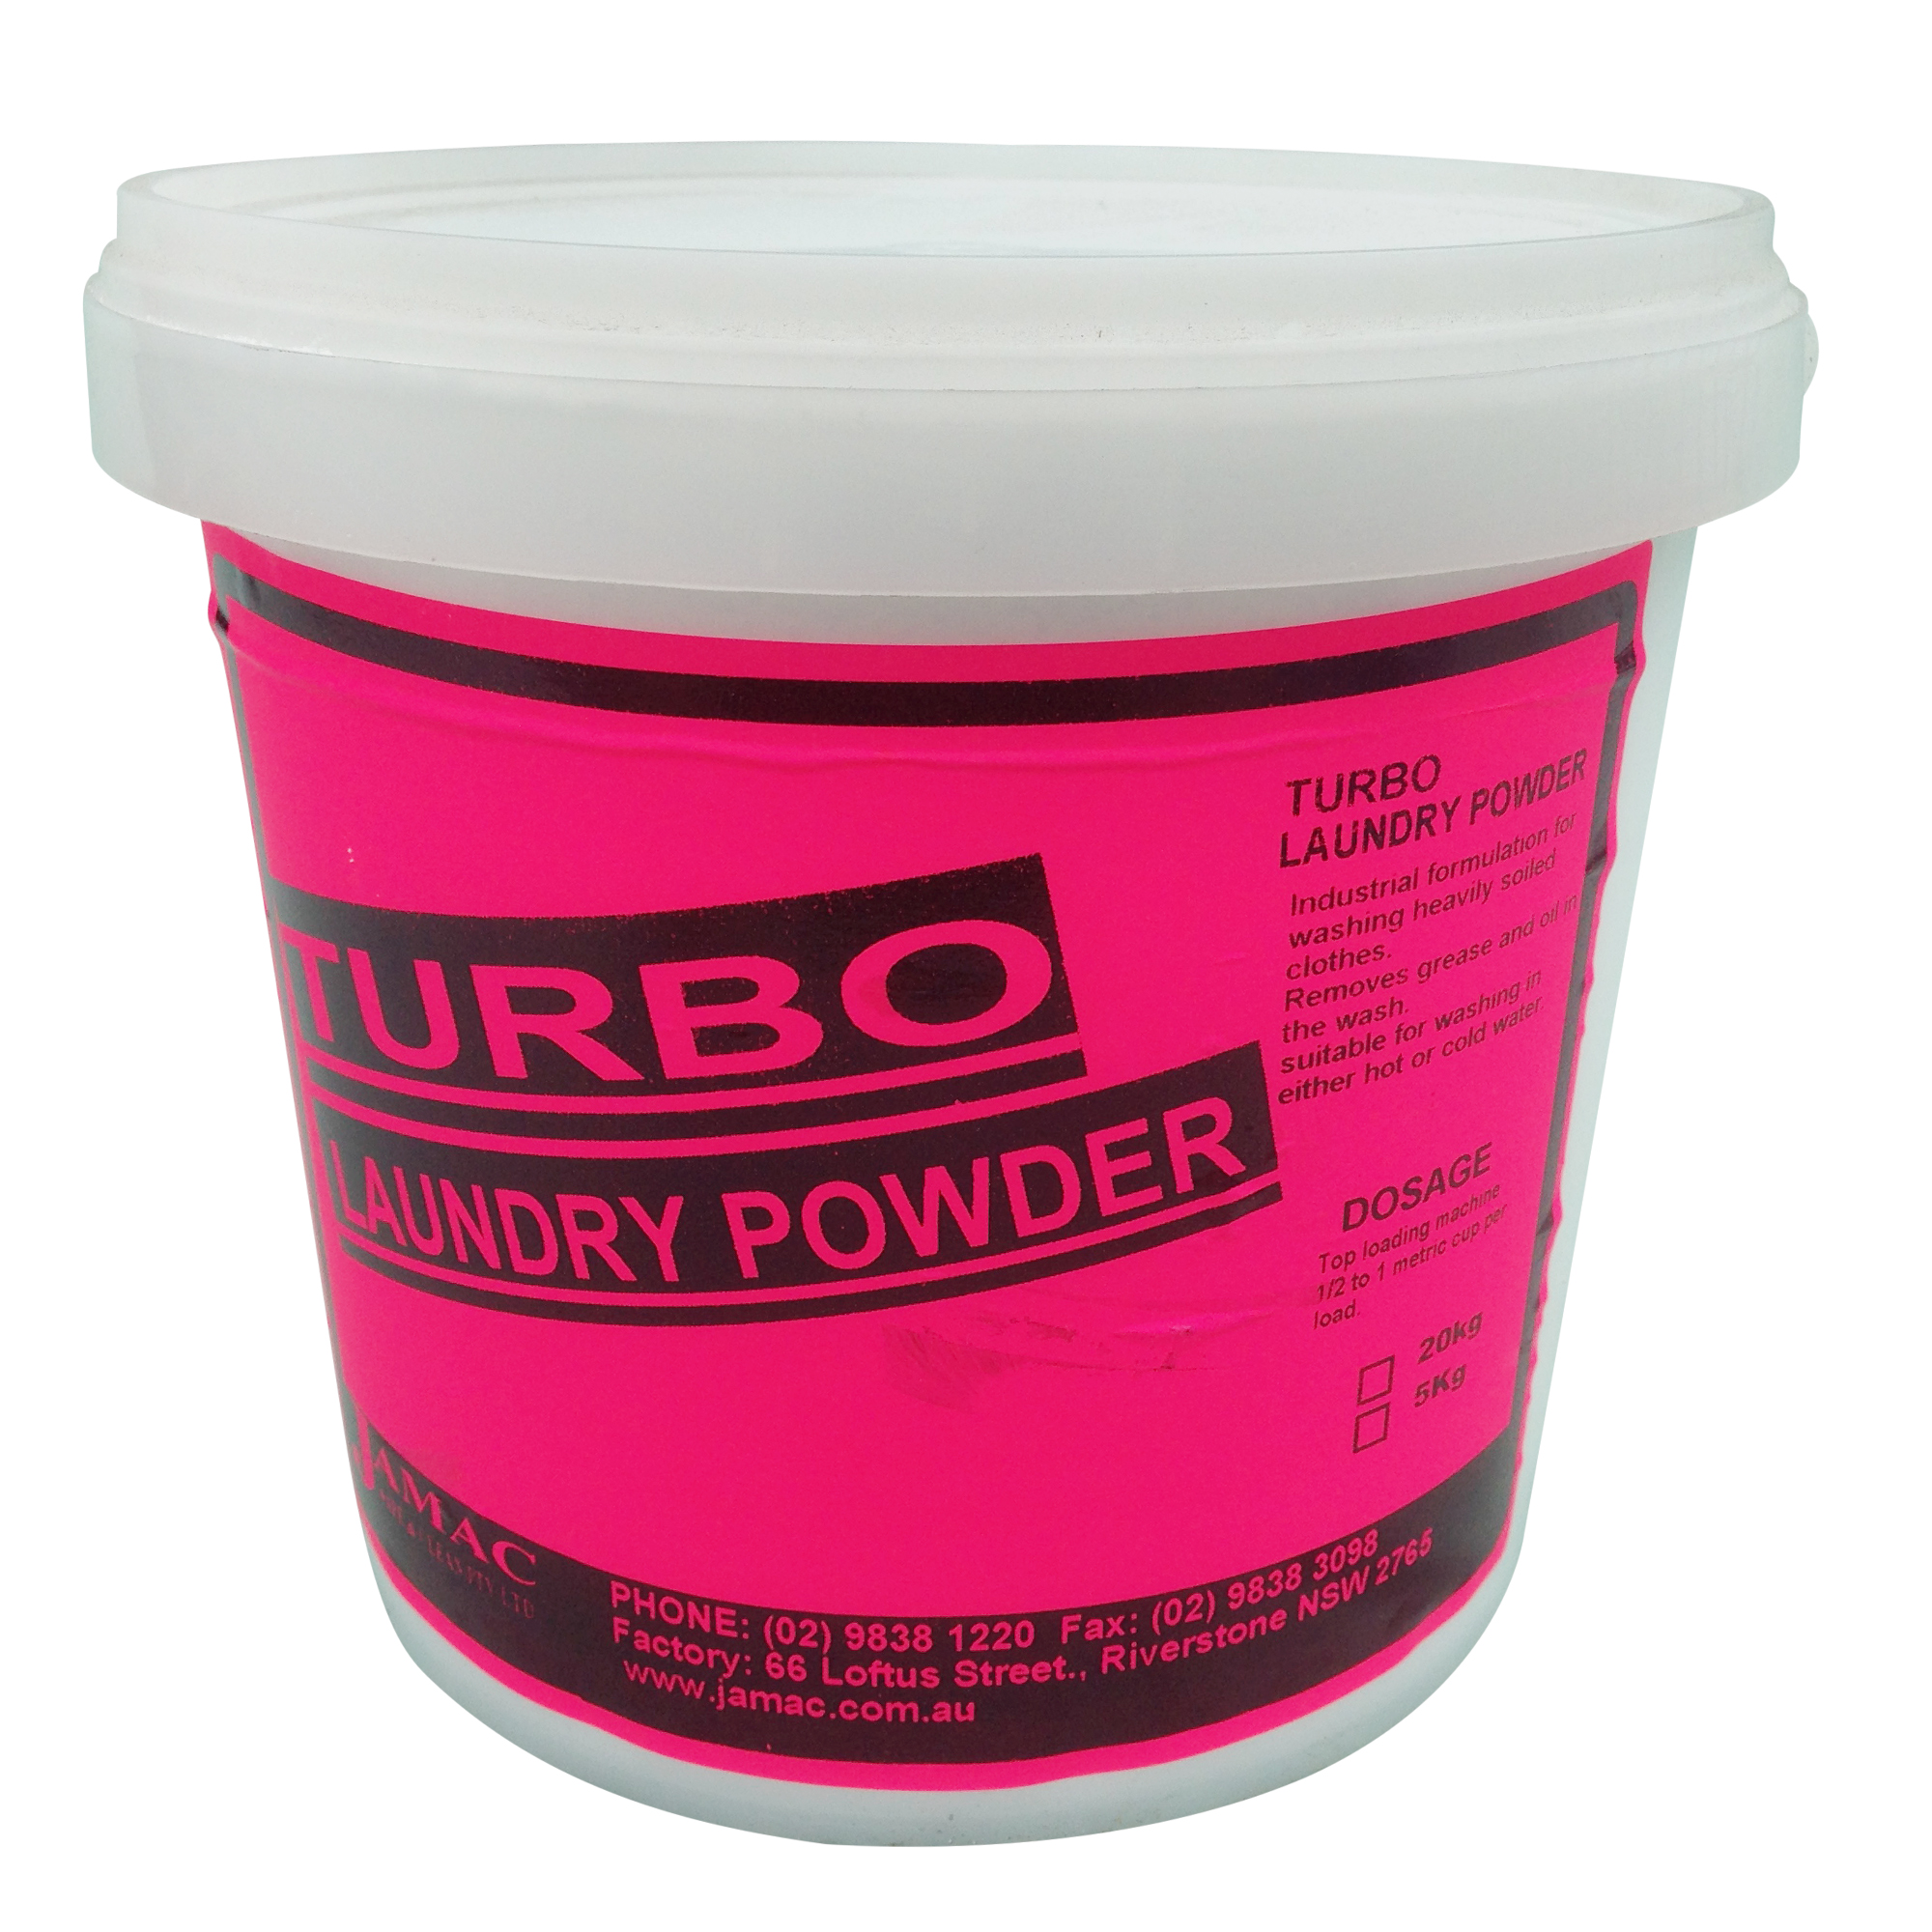 TURBO Laundry Powder